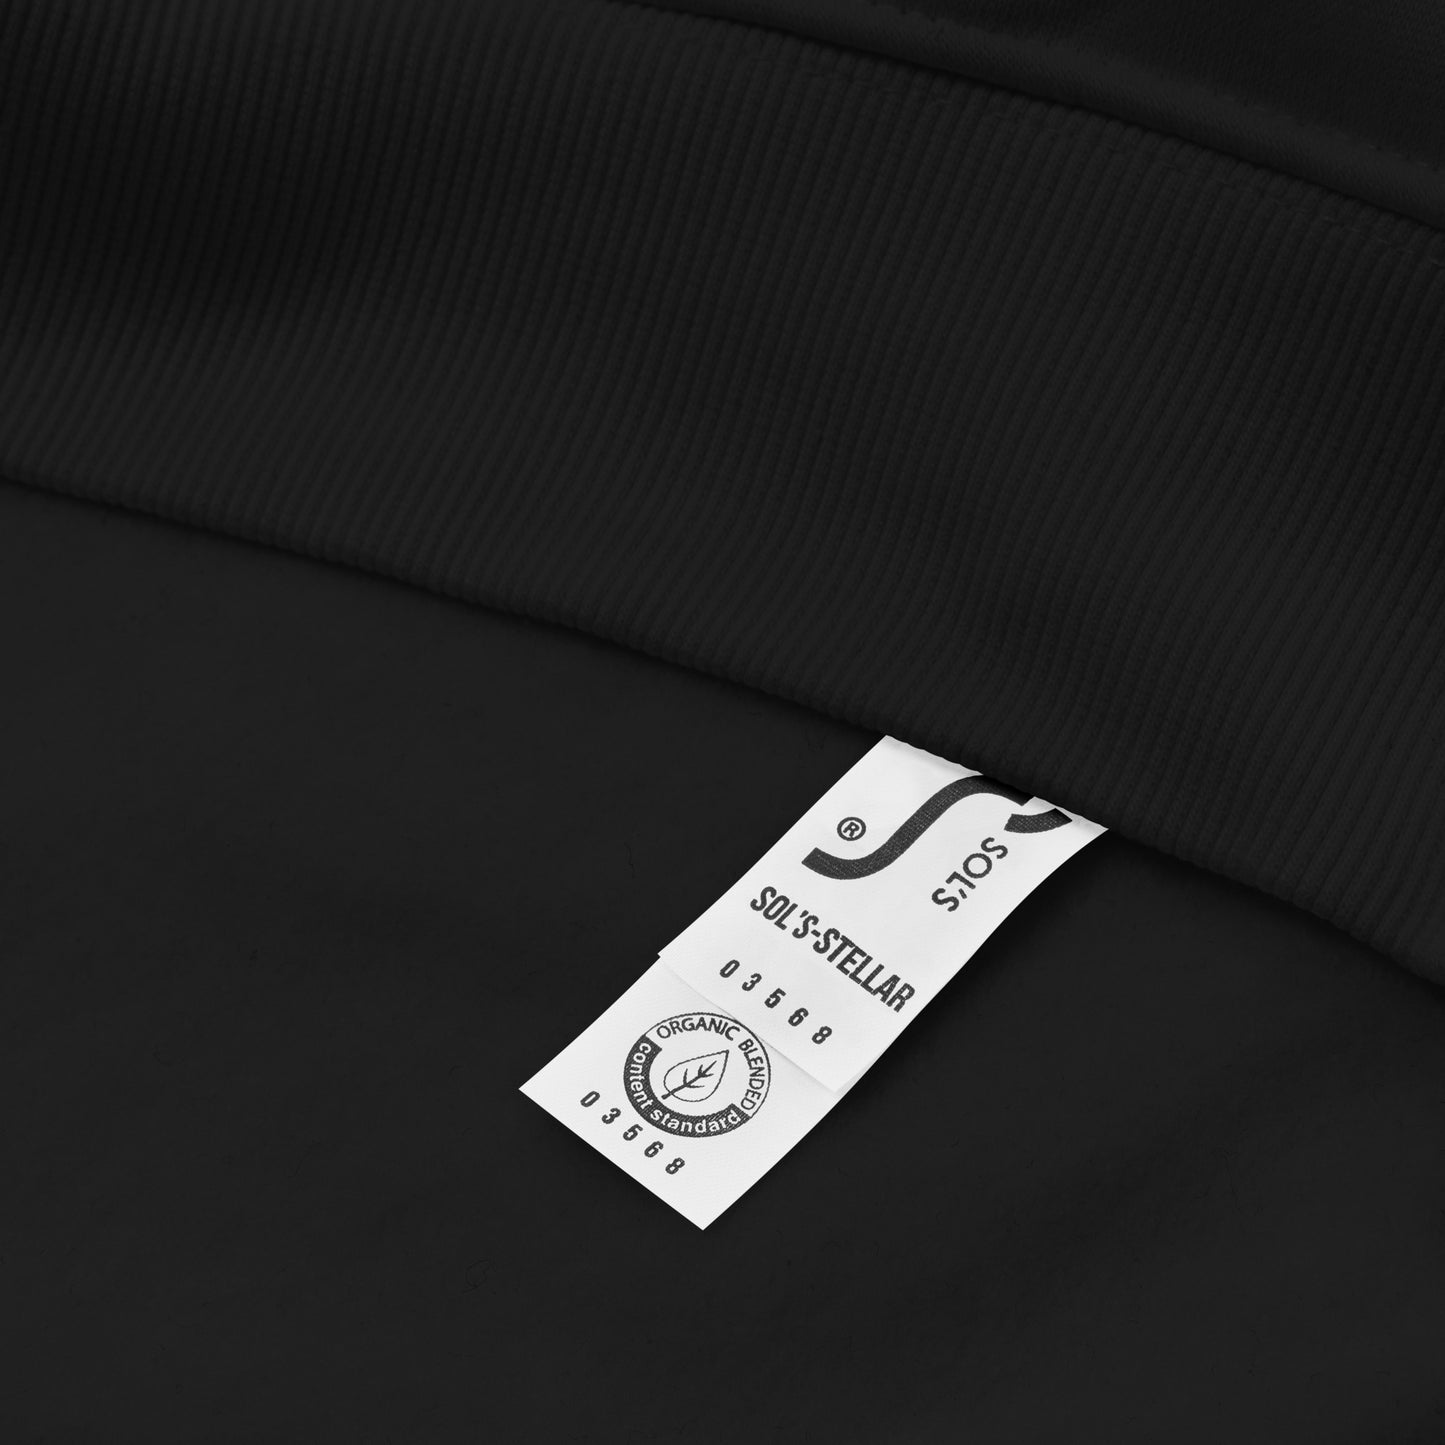 IF Embroidered Unisex eco raglan hoodie (Green & White Logo)